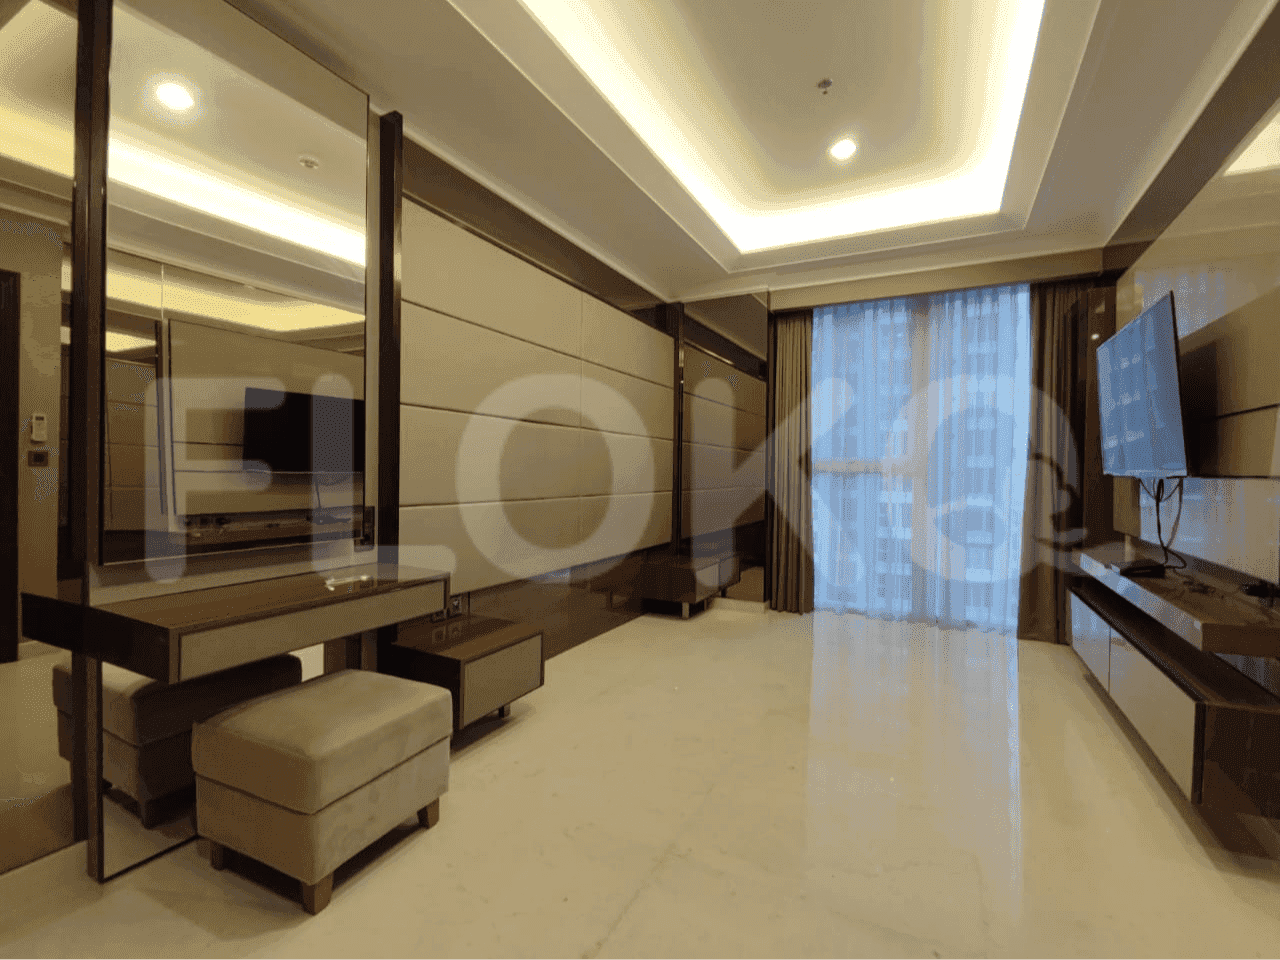 3 Bedroom on 8th Floor for Rent in Pondok Indah Residence - fpoac4 2